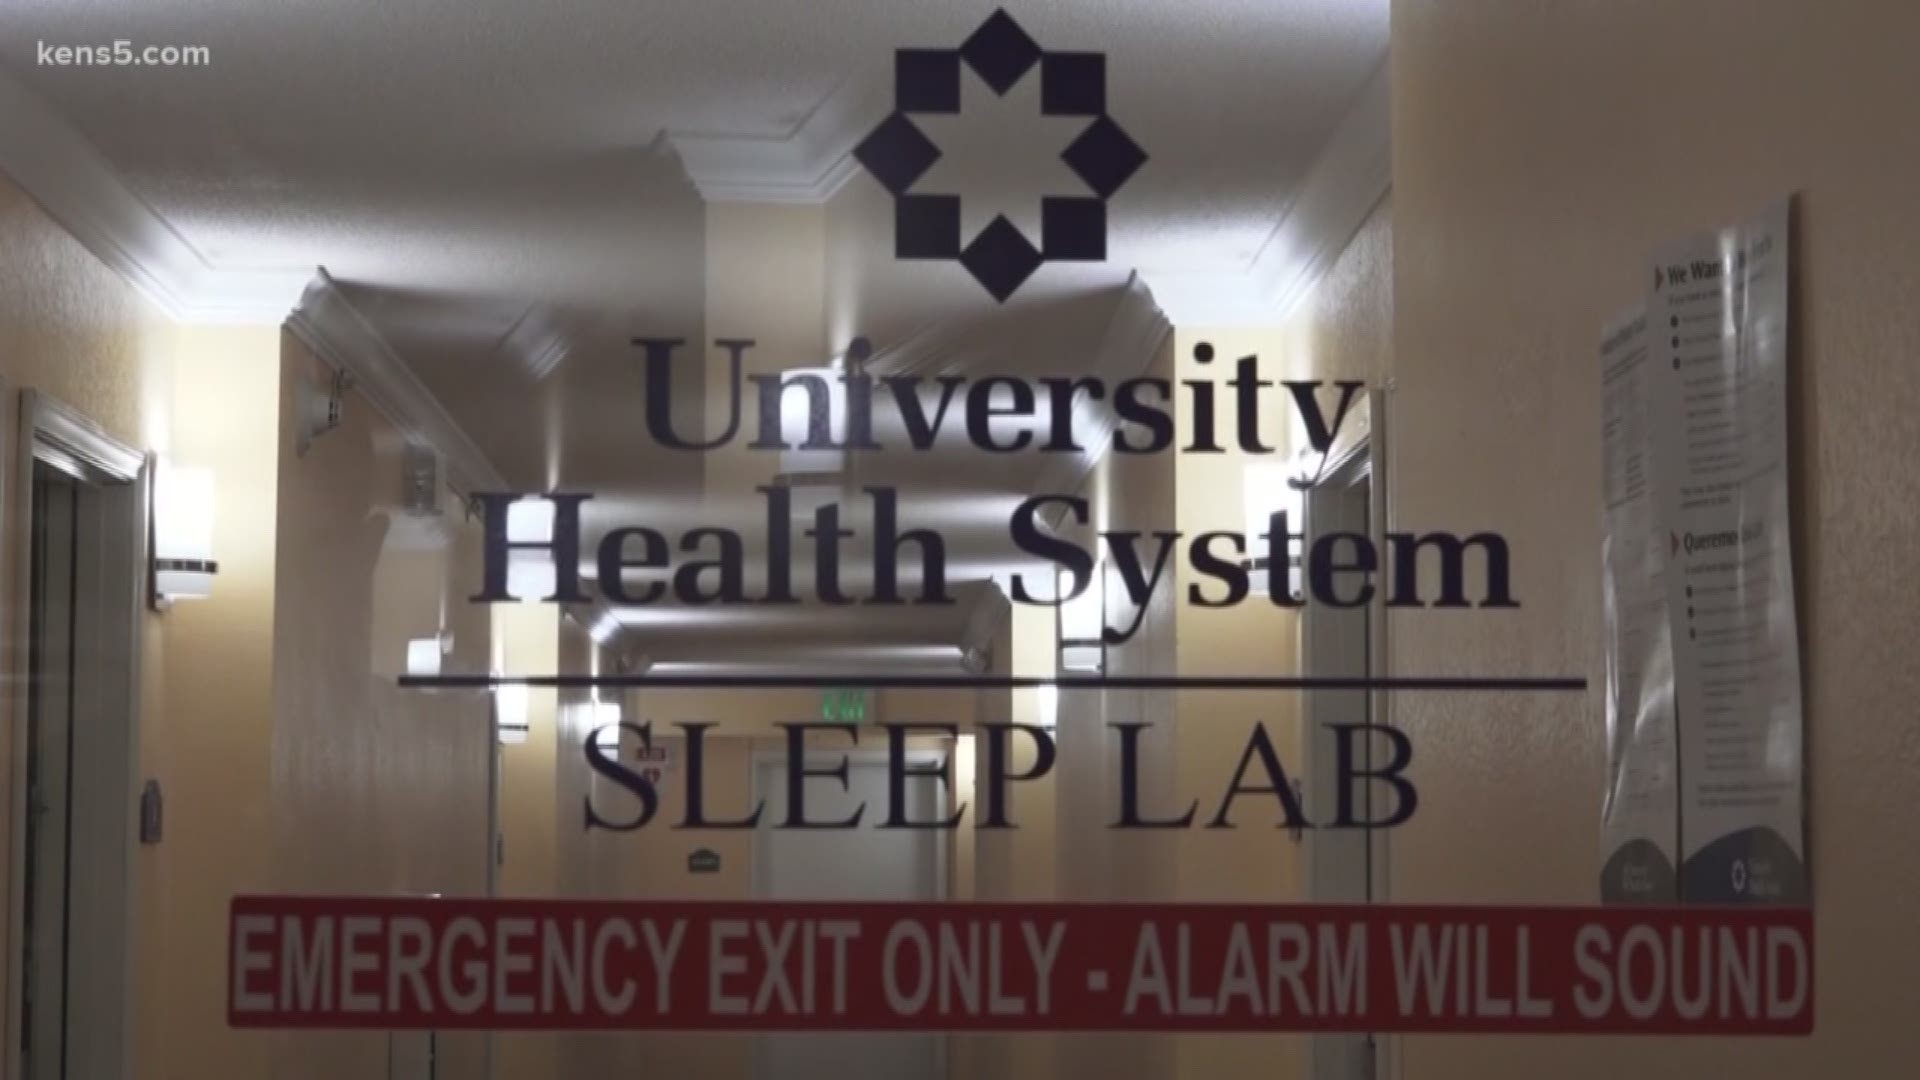 Take a look inside one of University Health System's sleep labs where doctors can diagnose sleep apnea.